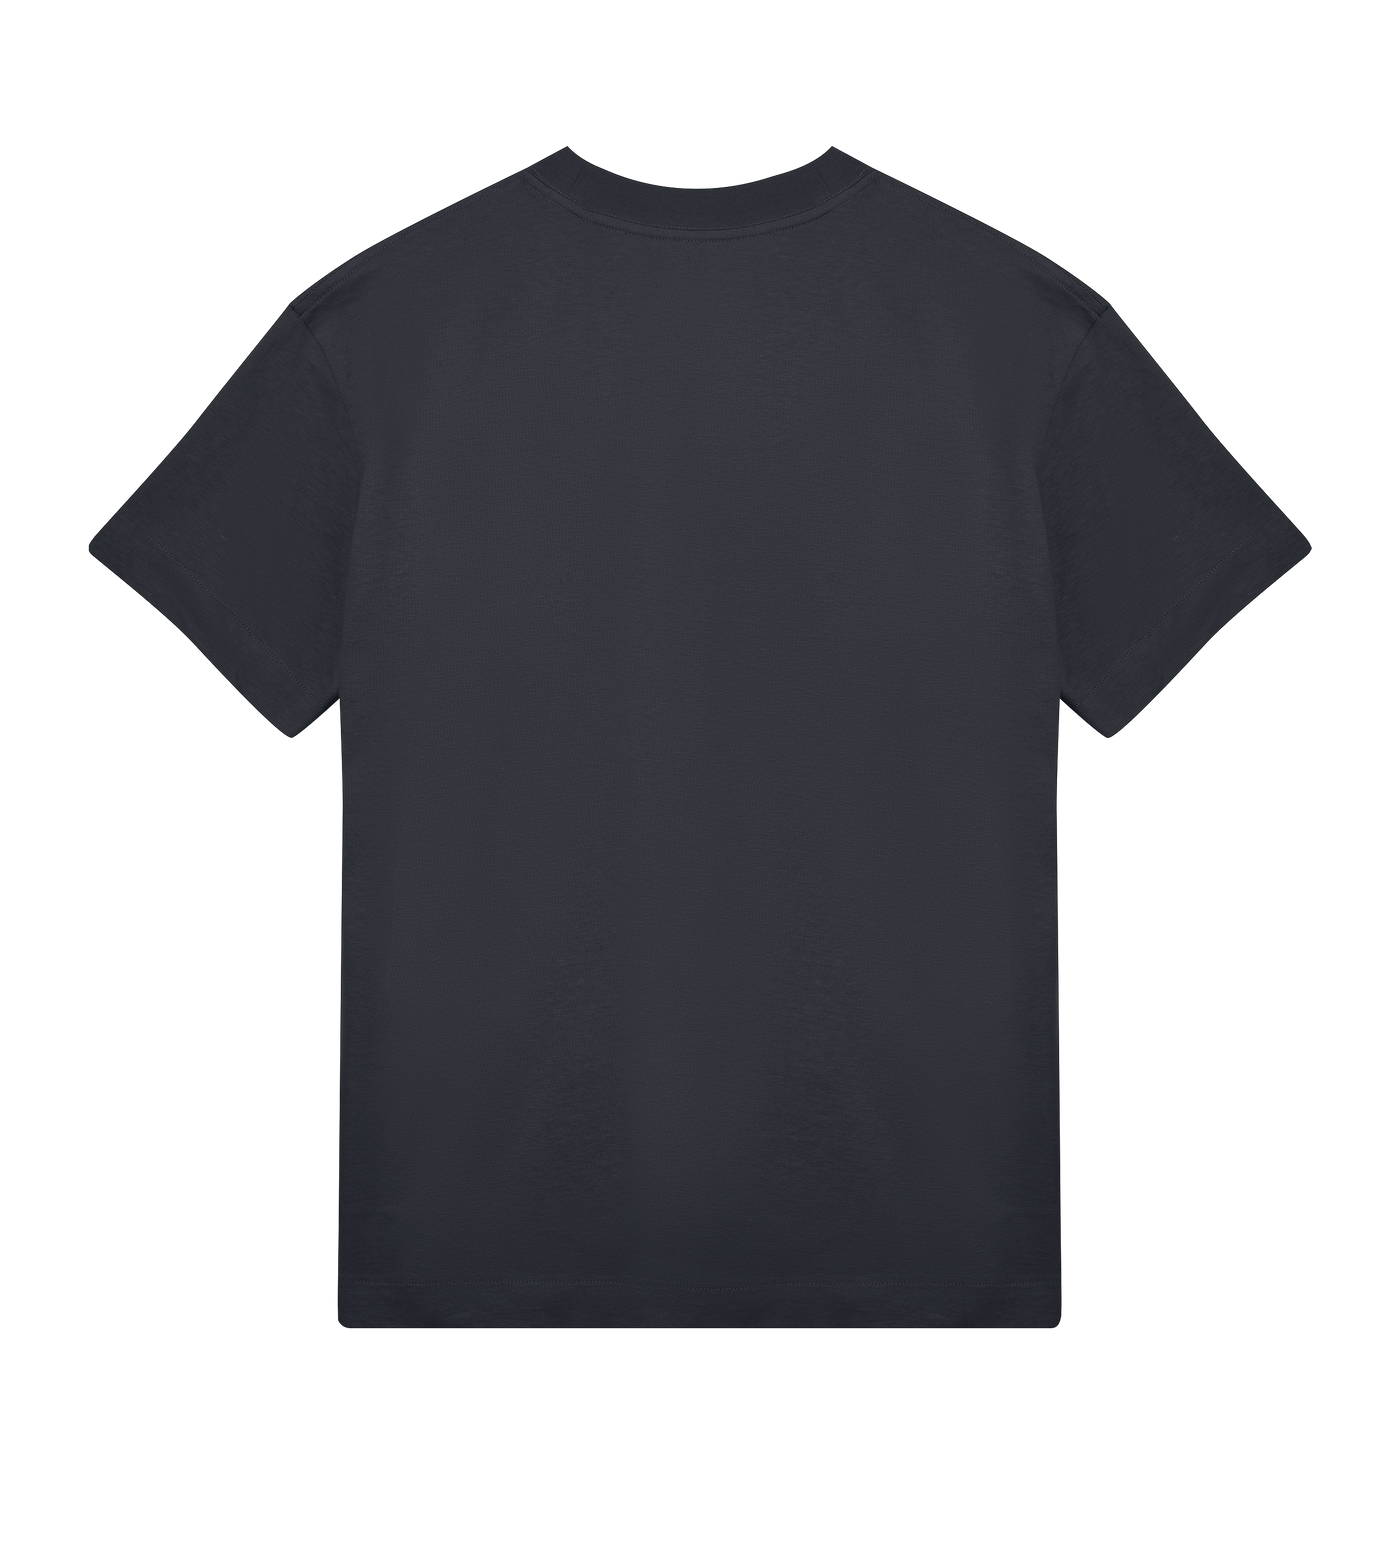 Reyrr Football Boxy T-shirt - Premium t-shirt from REYRR STUDIO - Shop now at Reyrr Athletics